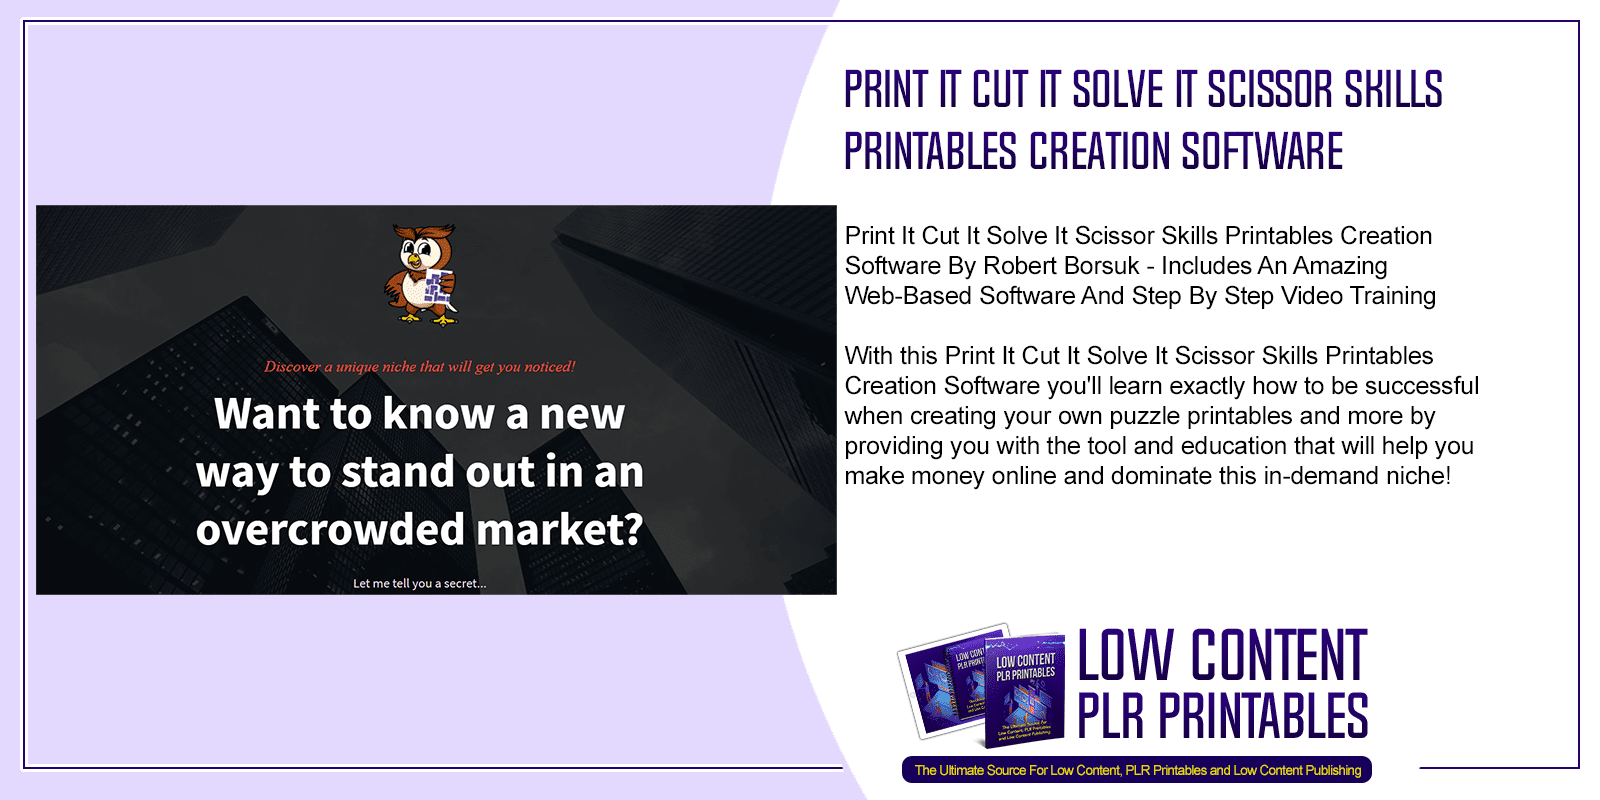 Print It Cut It Solve It Scissor Skills Printables Creation Software